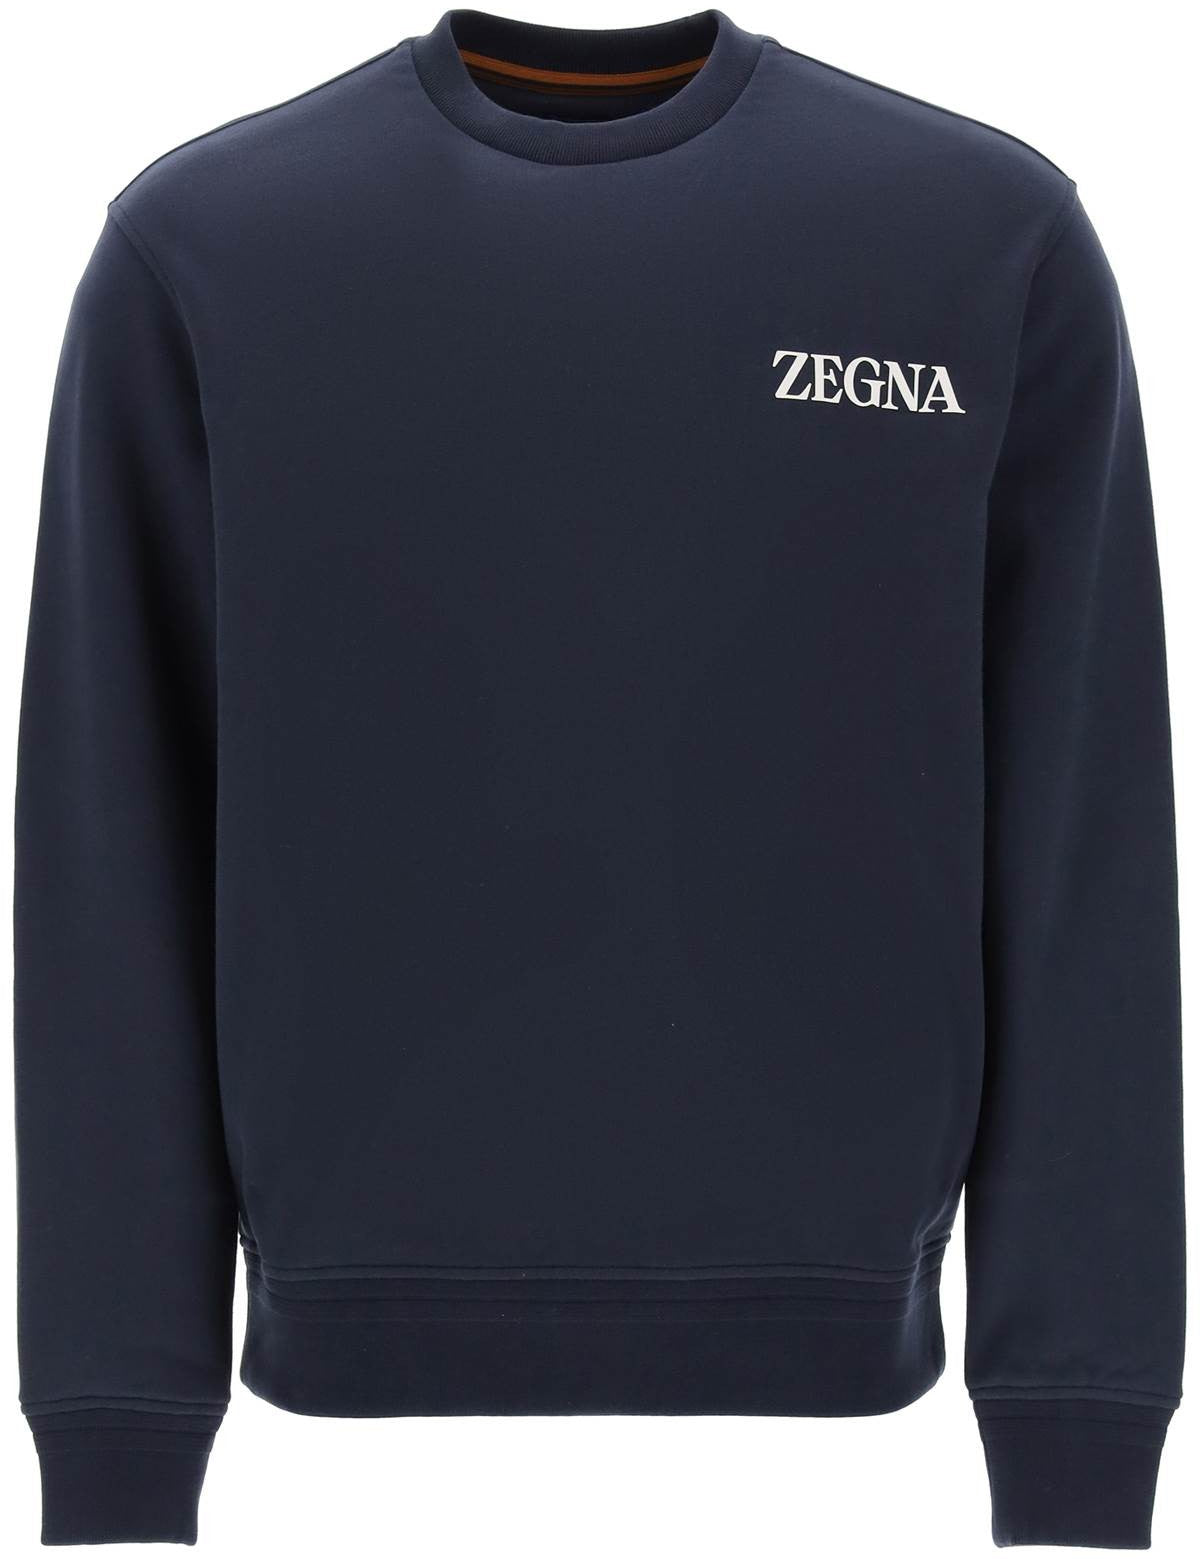 zegna-crewneck-sweatshirt-with-rubberized-logo_f50166a5-7eae-45c6-8158-1bb96526bf9e.jpg